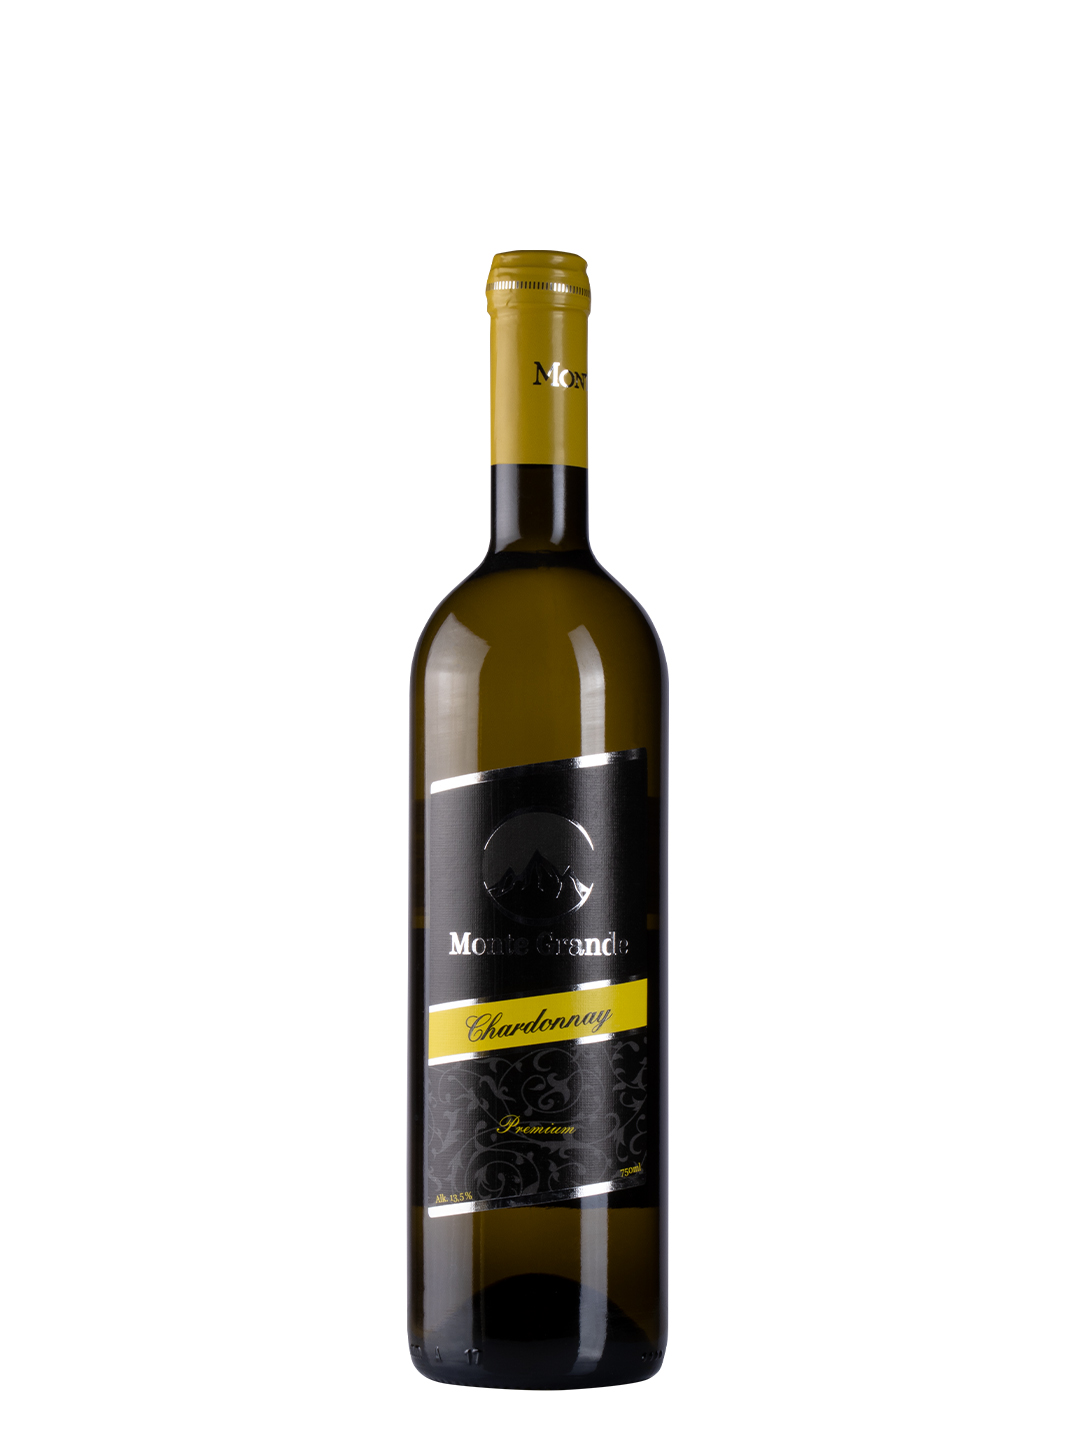 Monte Grande Chardonnay Premium 